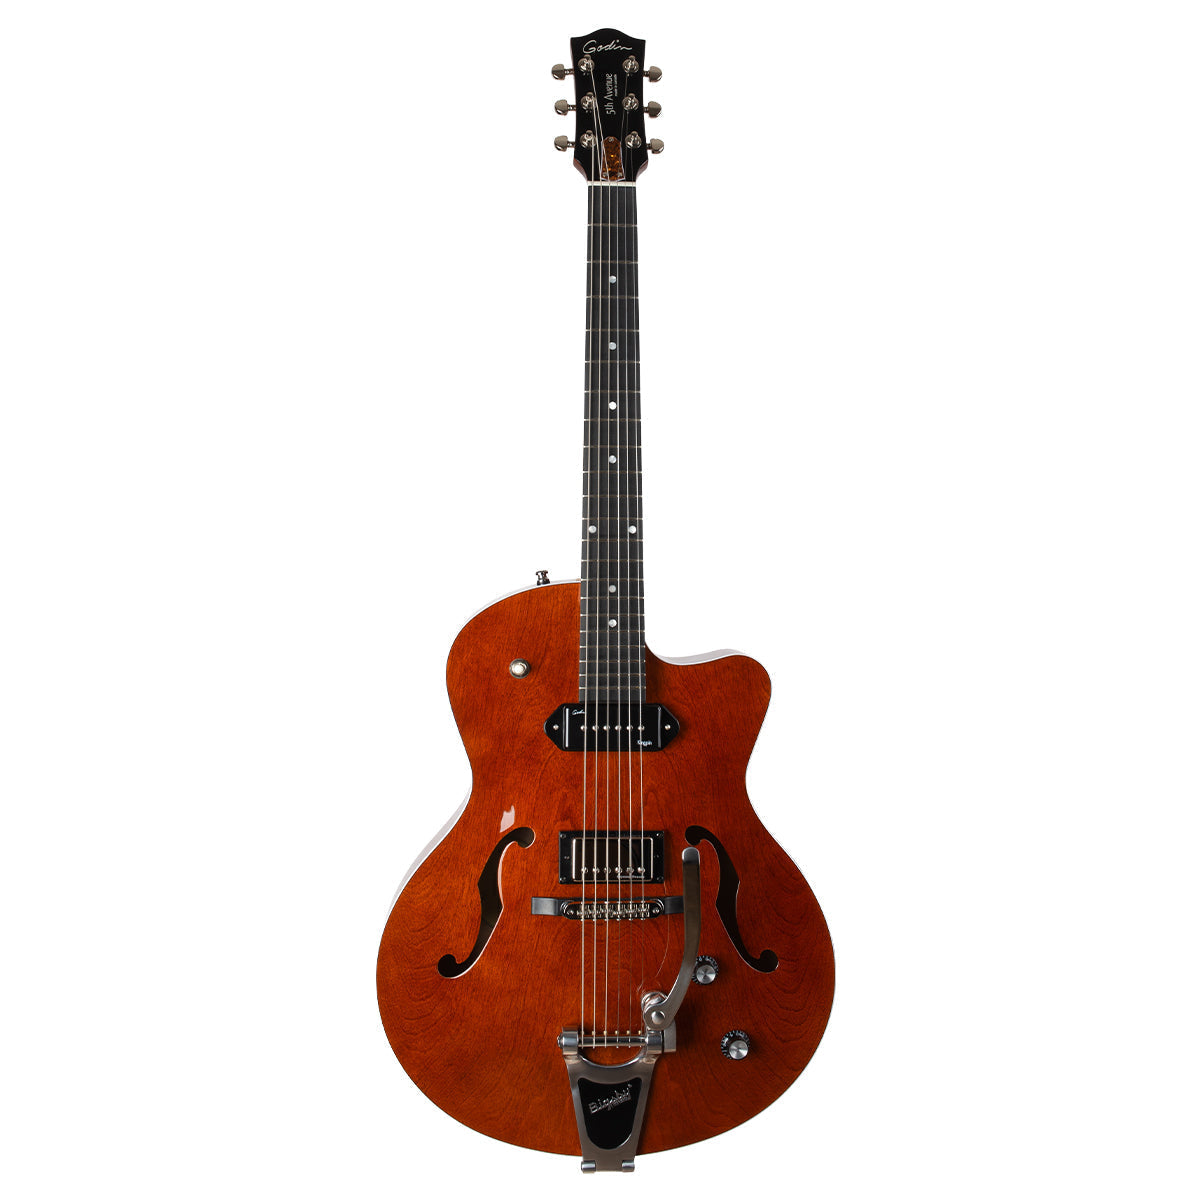 Godin 5th Avenue Semi-Acoustic Guitar ~ Uptown Custom Havana Brown, Electric Guitar for sale at Richards Guitars.